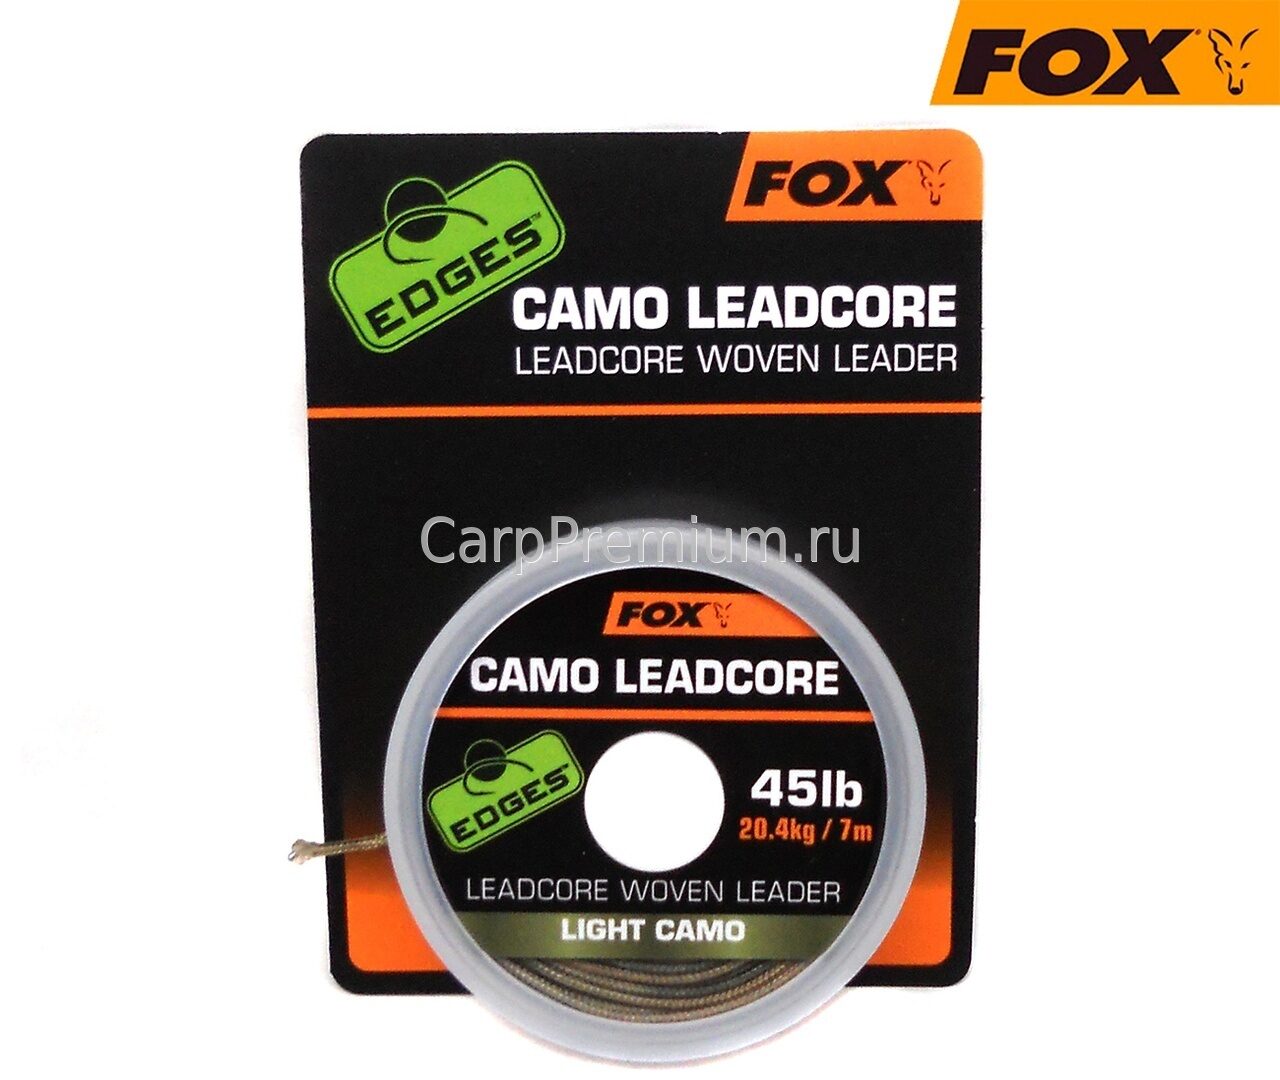 Fox Leadcore. Fox (Фокс) - Edges Maggot clip. Fox (Фокс) - Edges Speed links. Fox edges